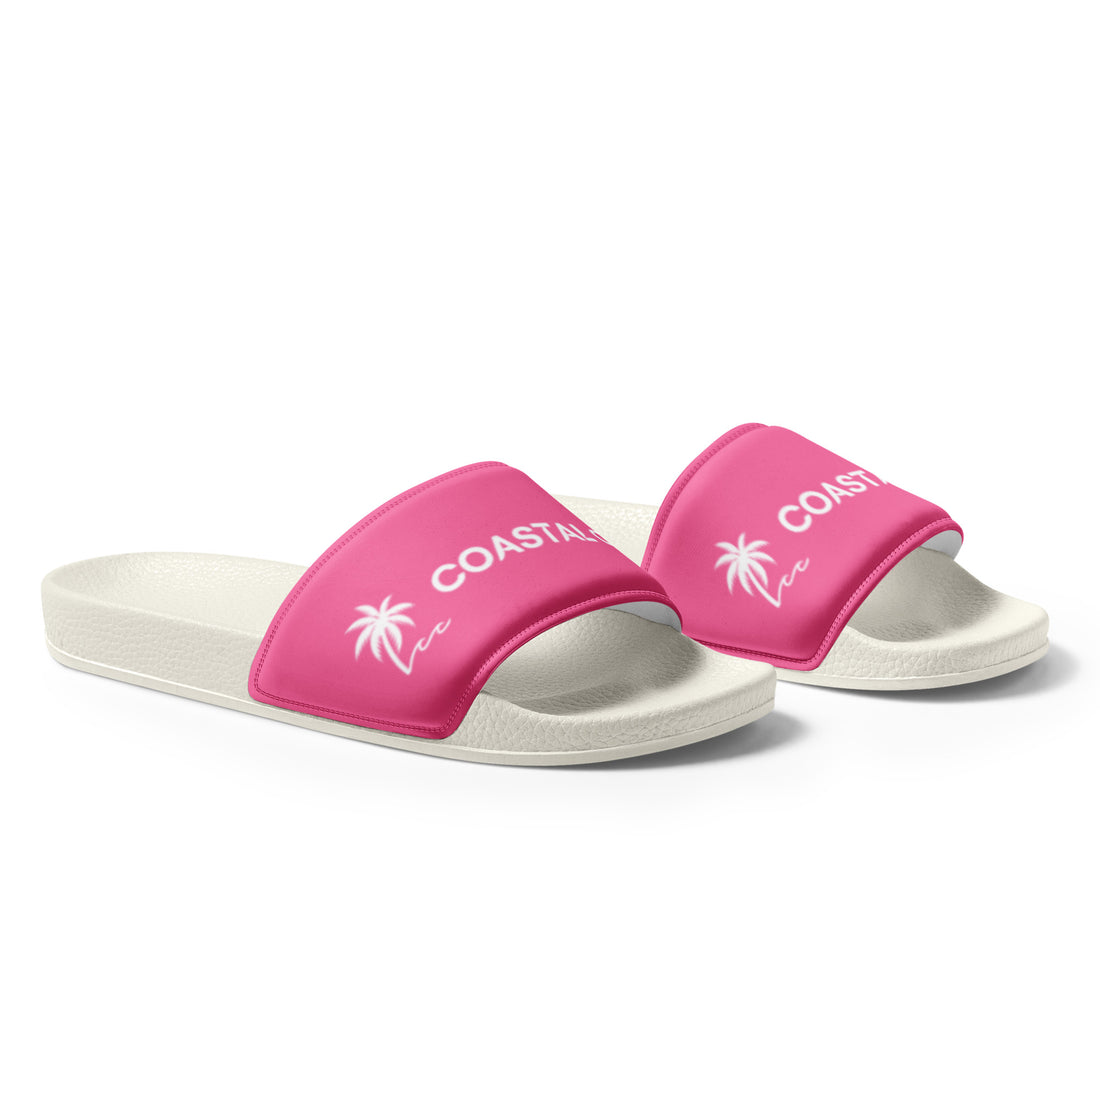 Women's Slides - Pink - Coastal Cool - Swimwear and Beachwear - Recycled fabrics